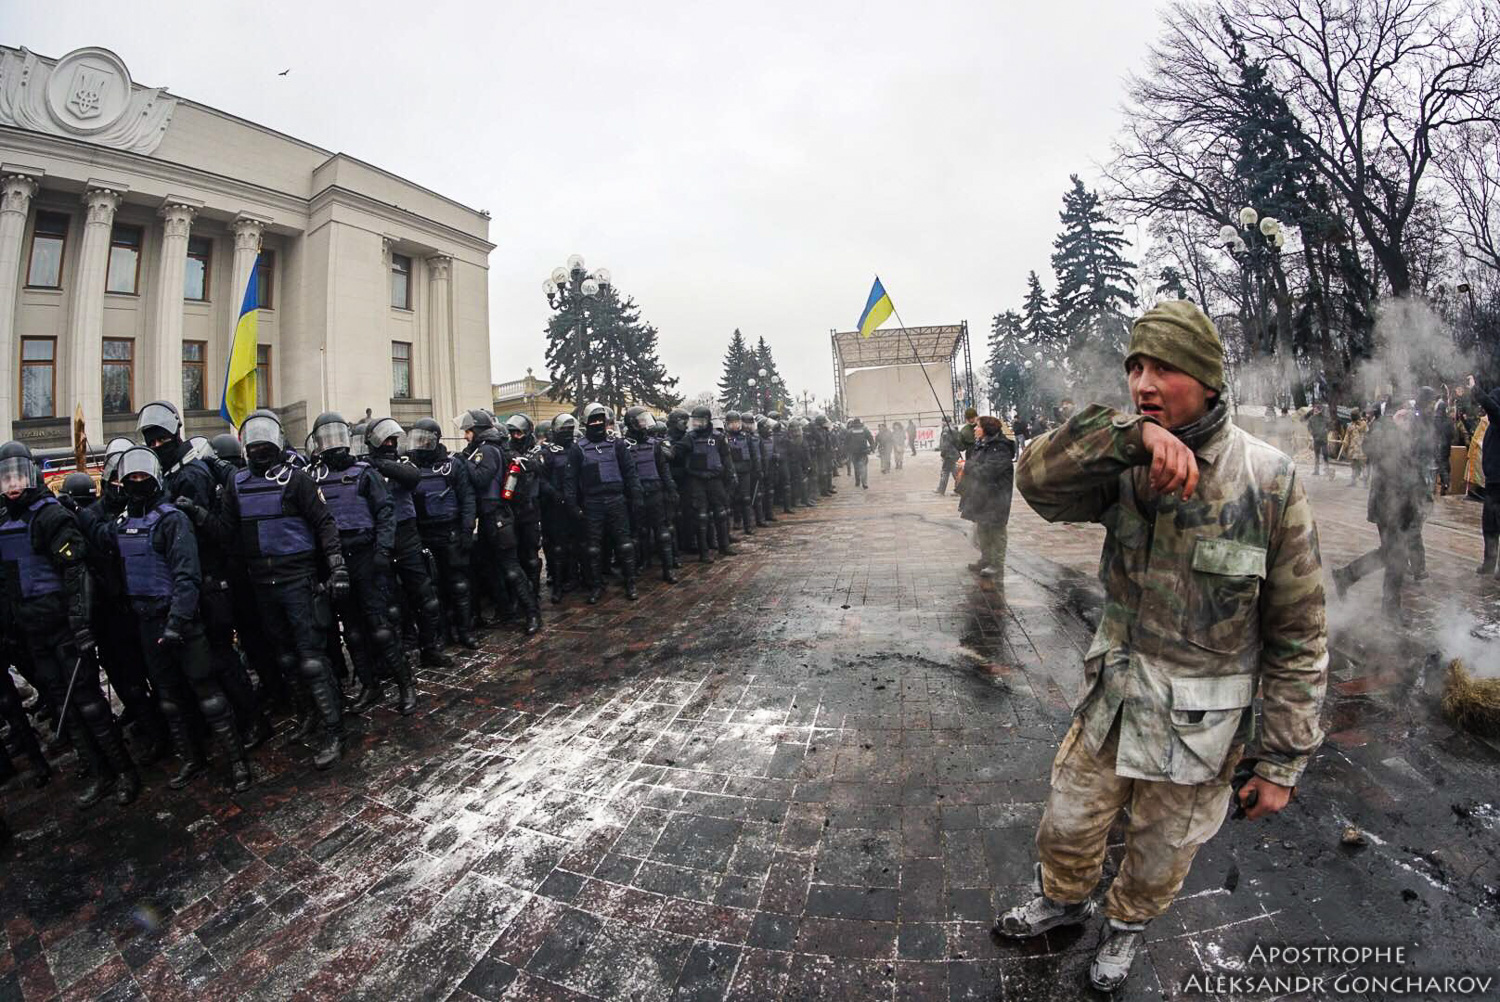 Donbas - Ukraine News in brief. Tuesday 16 January. [Ukrainian sources] 4e141d7b47159f66fdba6db27beab3cd